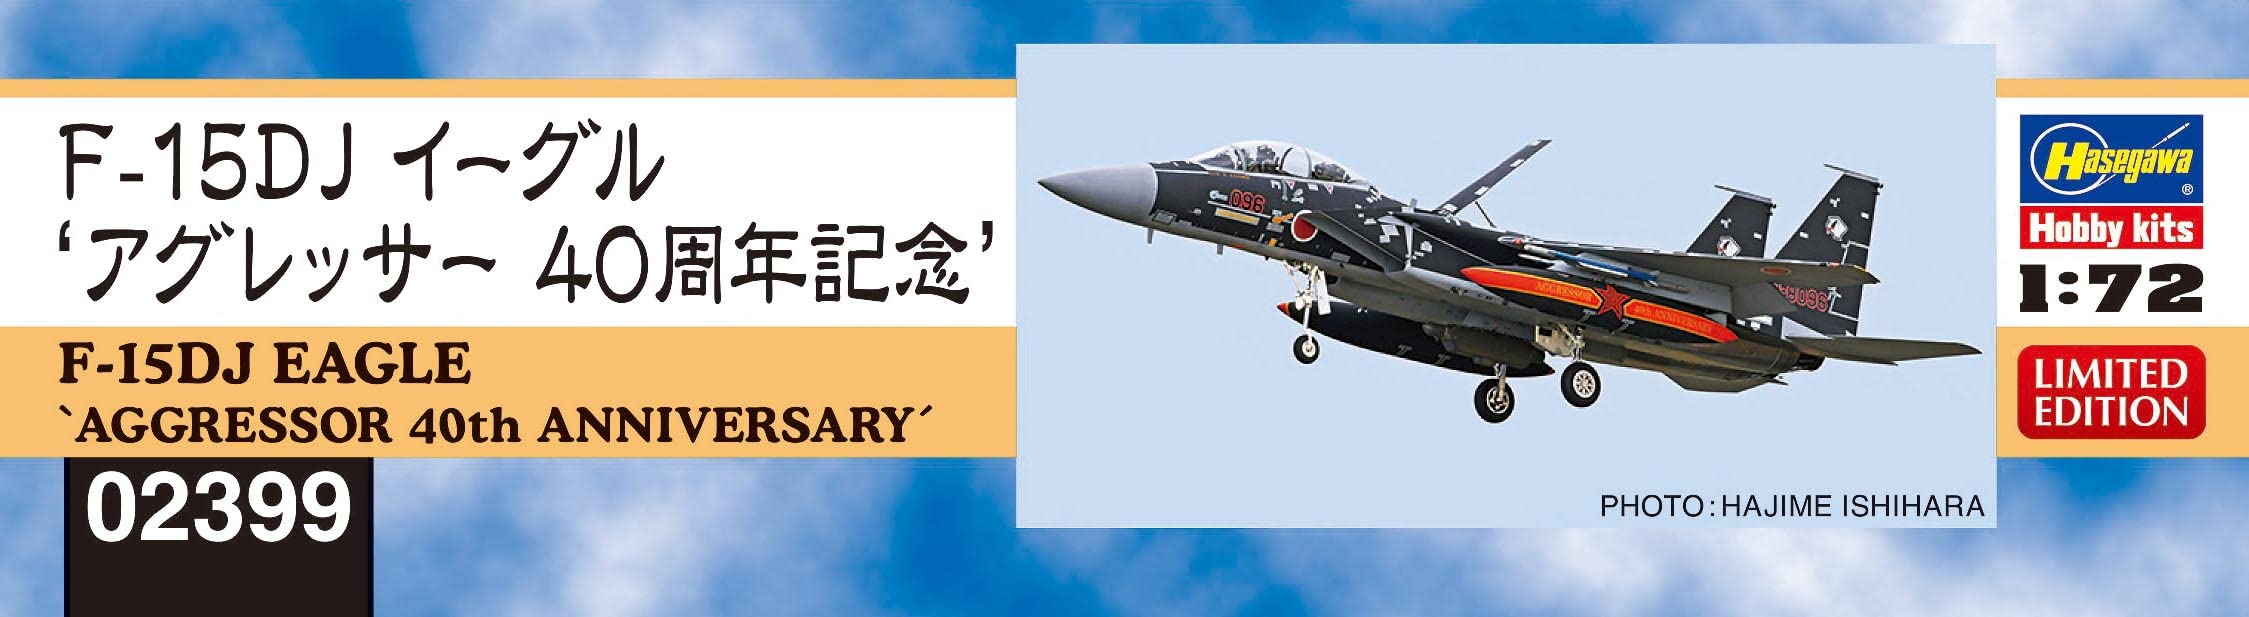 HASEGAWA 1/72 F-15Dj Eagle 'Aggressor 40Th Anniversary' Plastic Model